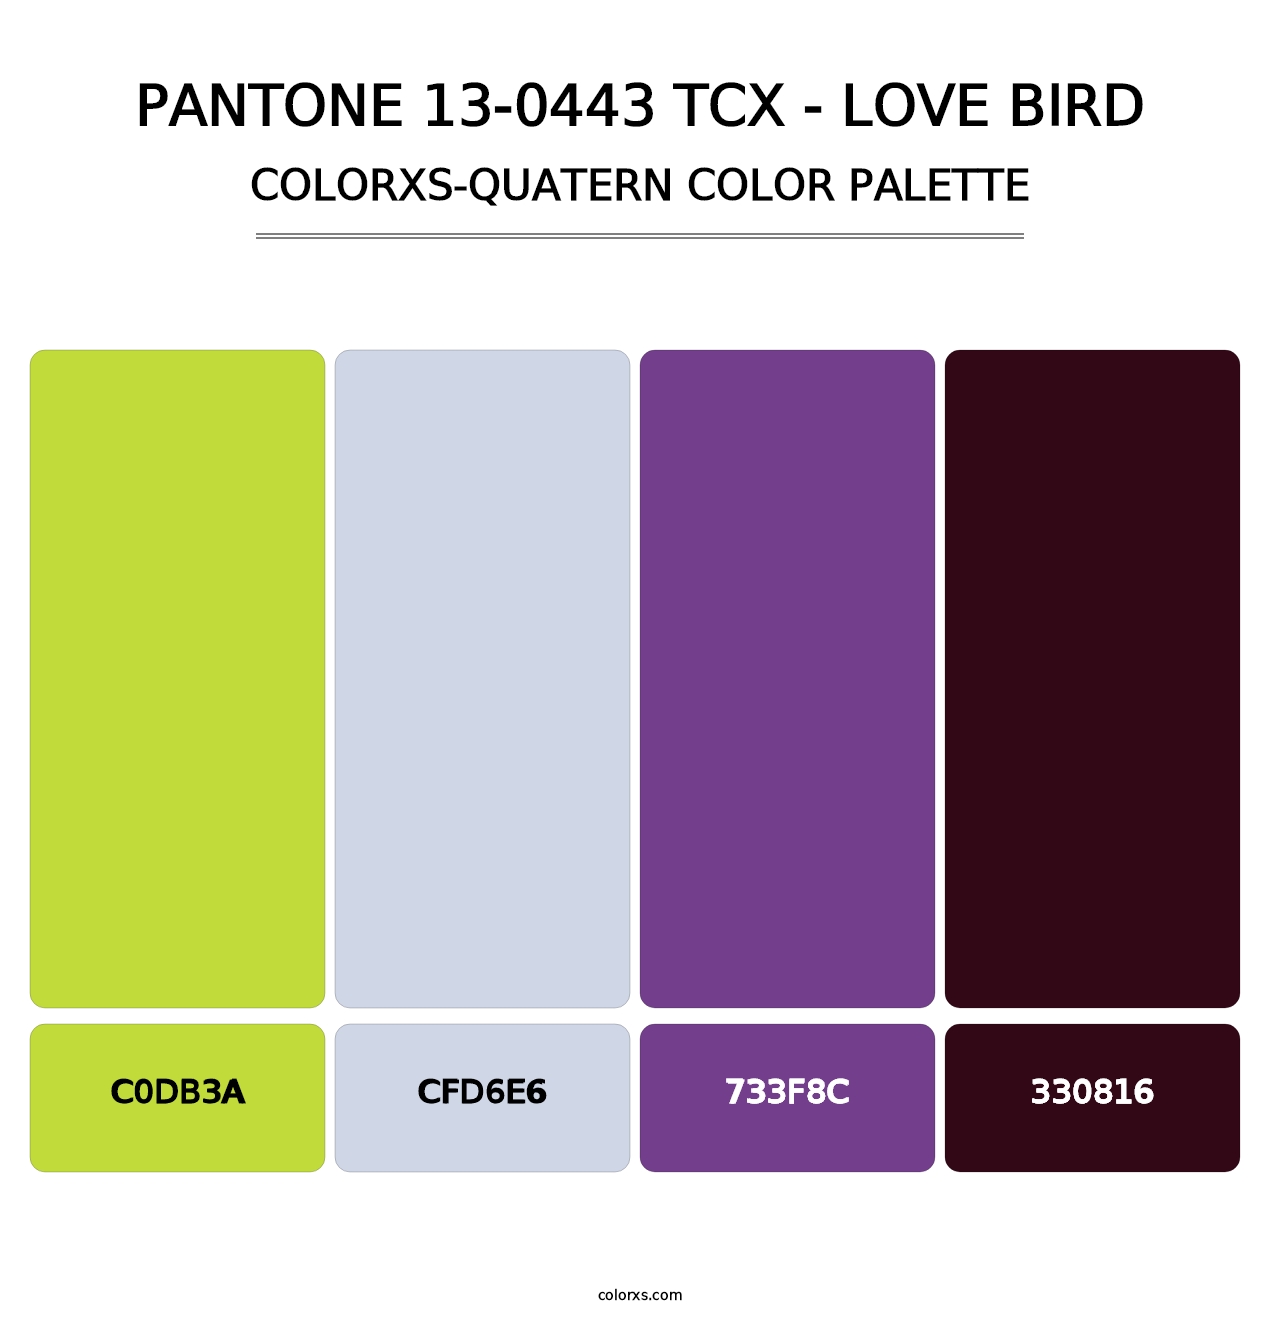 PANTONE 13-0443 TCX - Love Bird - Colorxs Quatern Palette